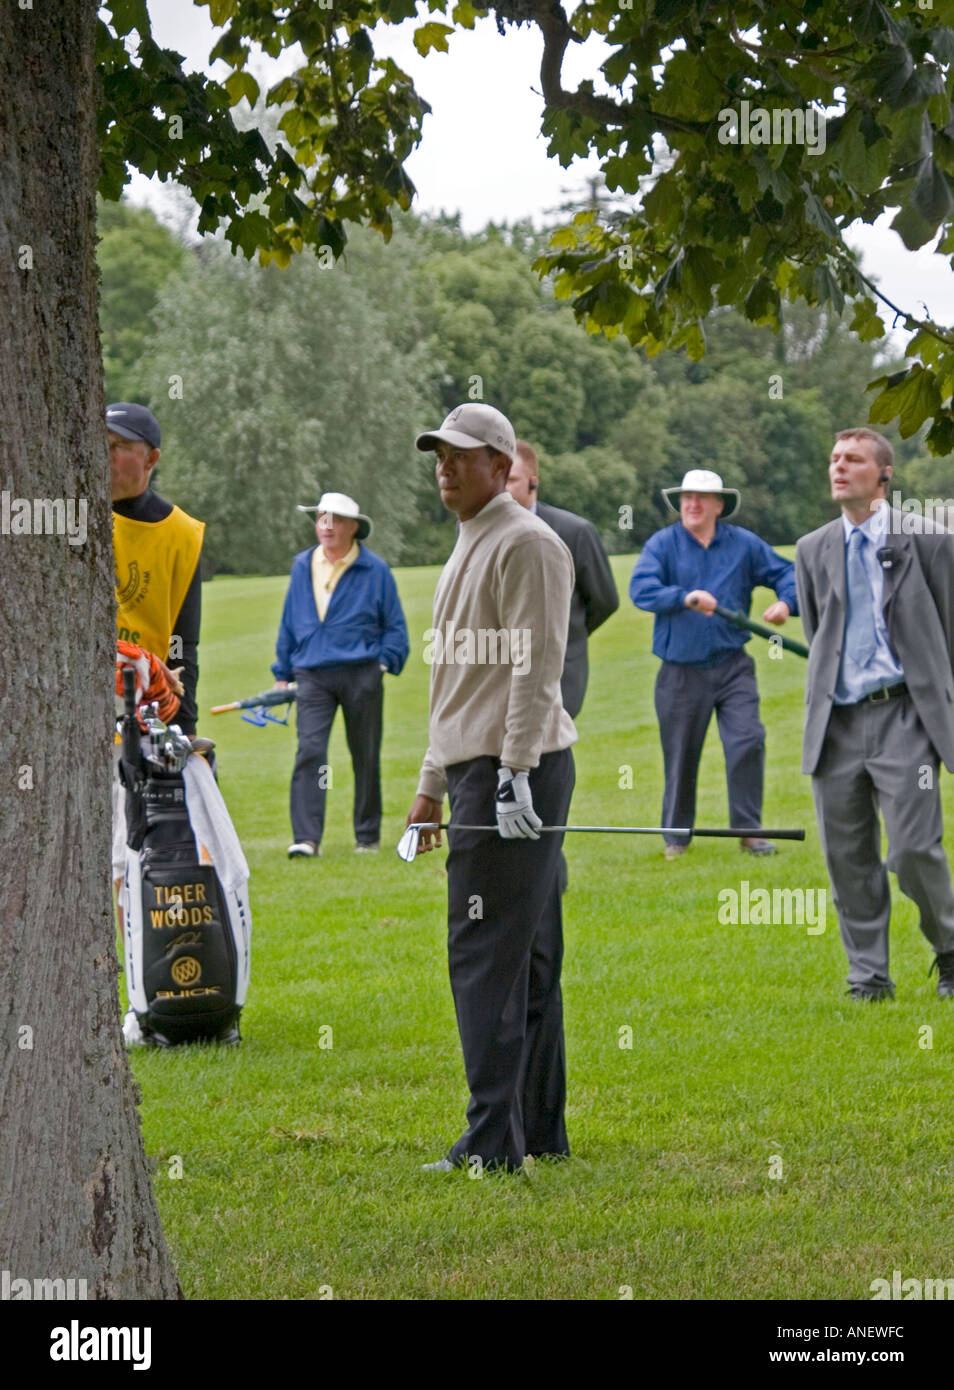 at Adare Golf Club, Ireland Stock Photo